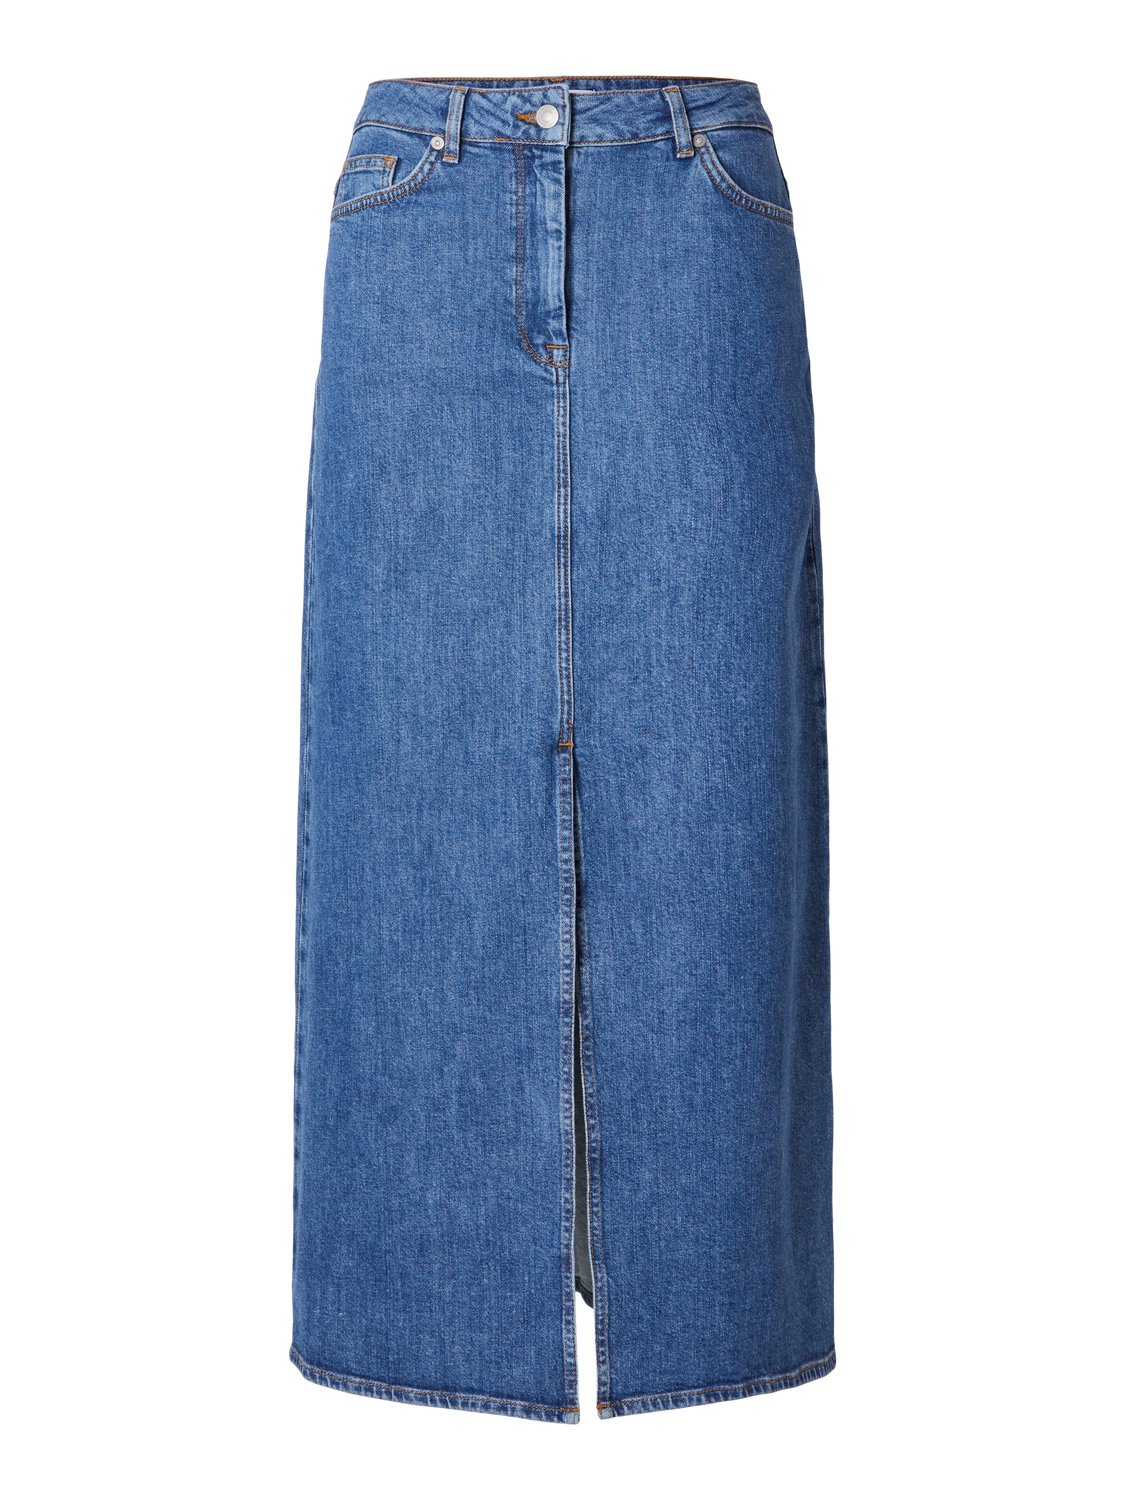 SLFBELLA Skirt - Medium Blue Denim